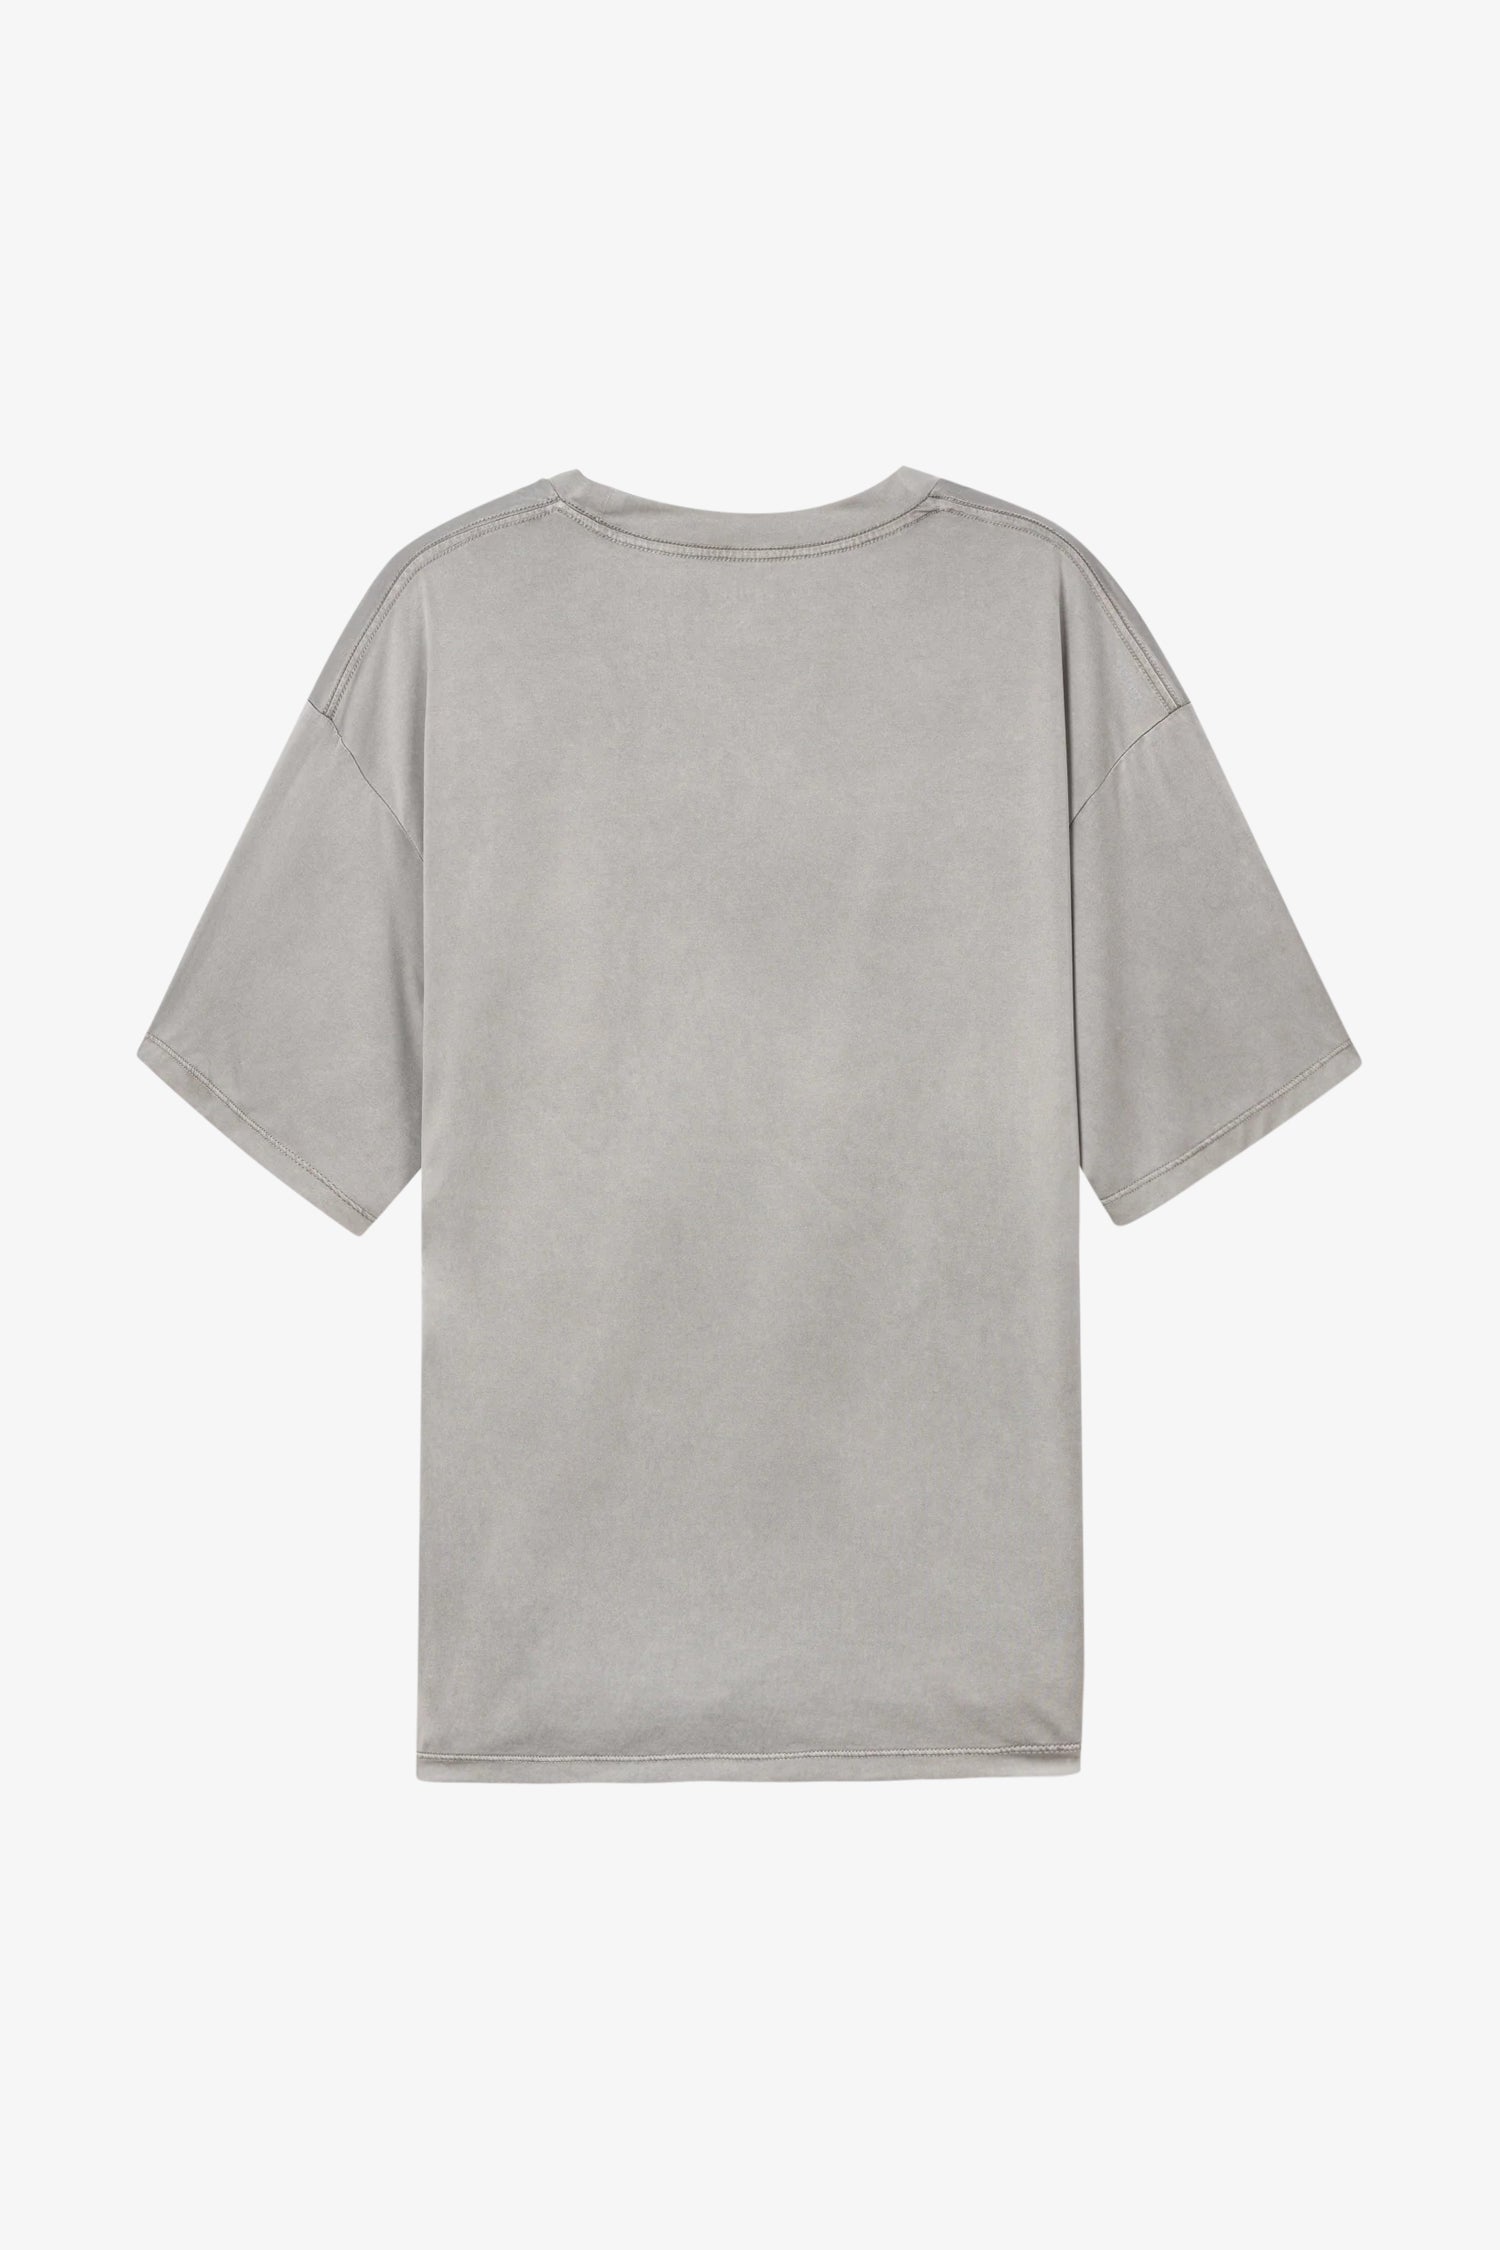 Aura Lite T-Shirt- Selectshop FRAME